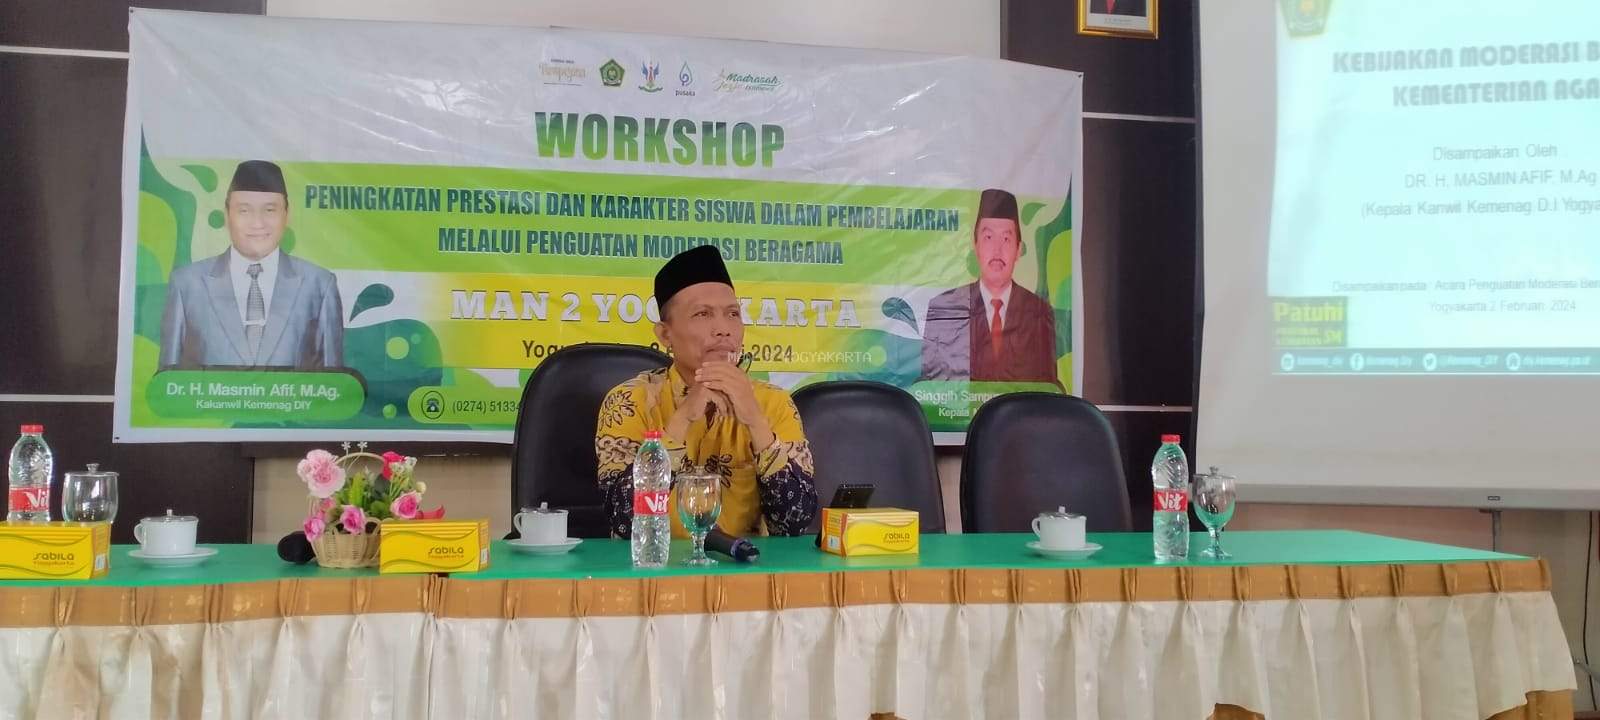 Kuatkan Sikap Moderasi Beragama, MAN 2 Yogyakarta Gelar Workshop